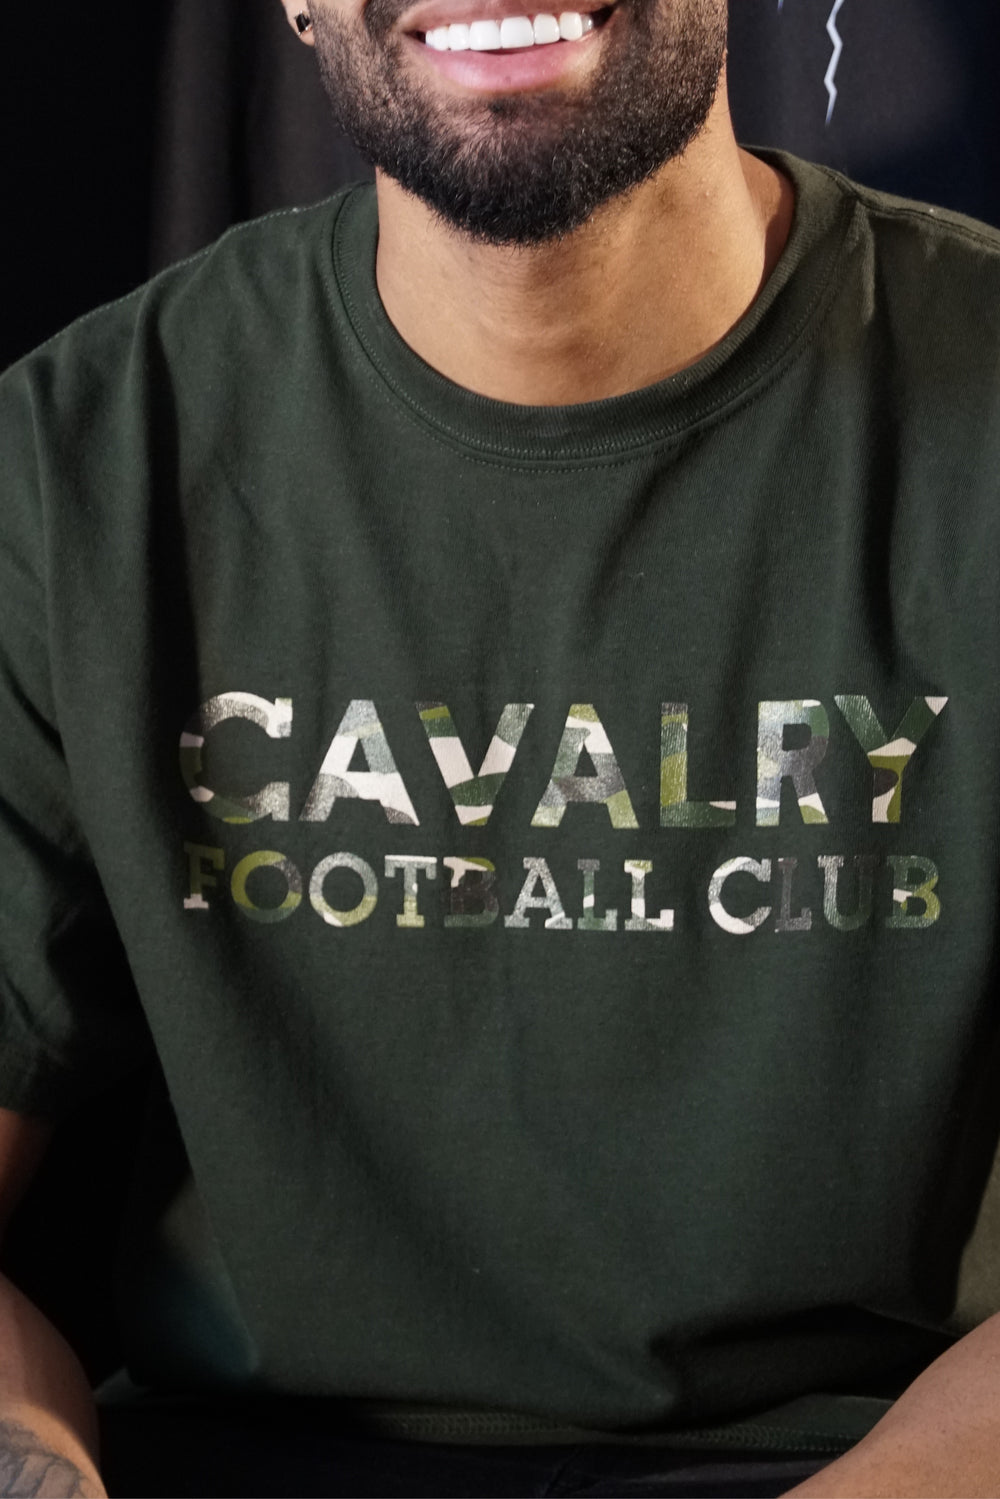 Cavalry FC Camo Text T-Shirt